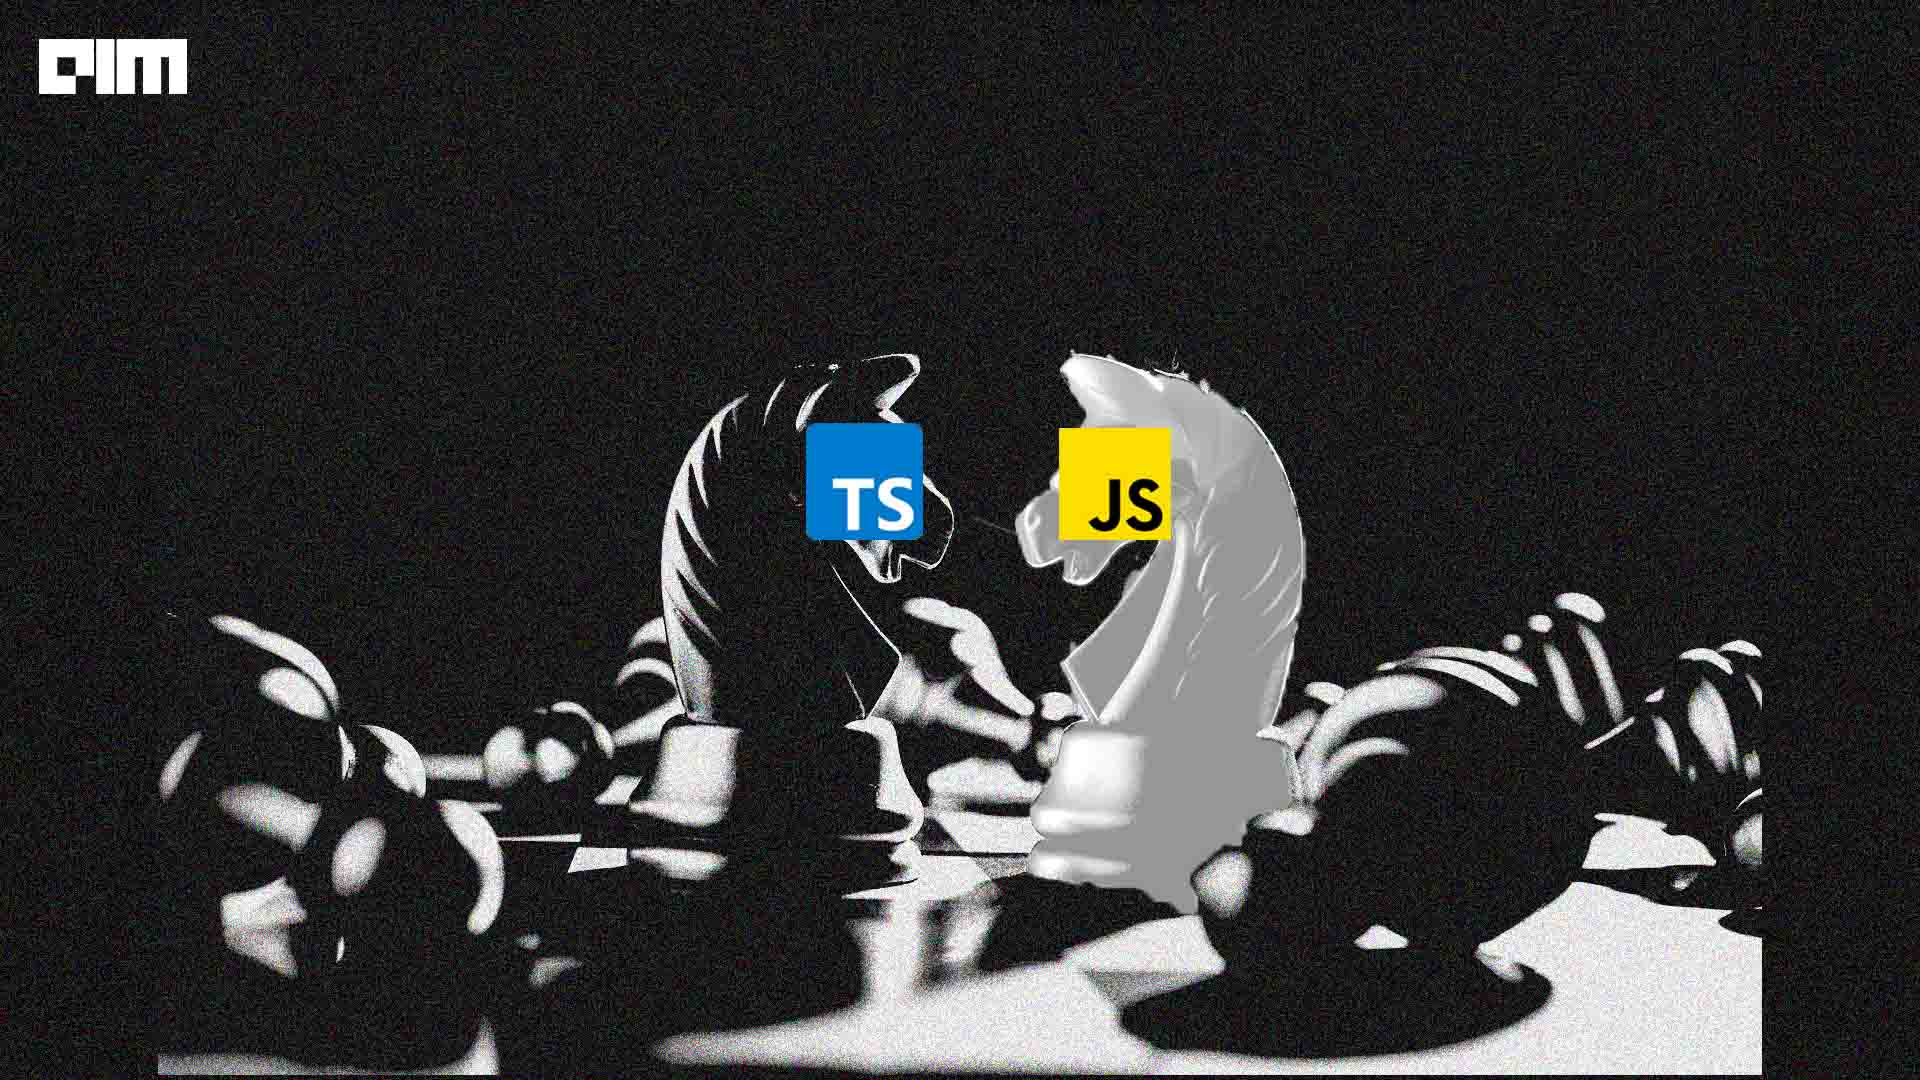 TypeScript vs JavaScript: Who's Winning This 10-year-long Battle?